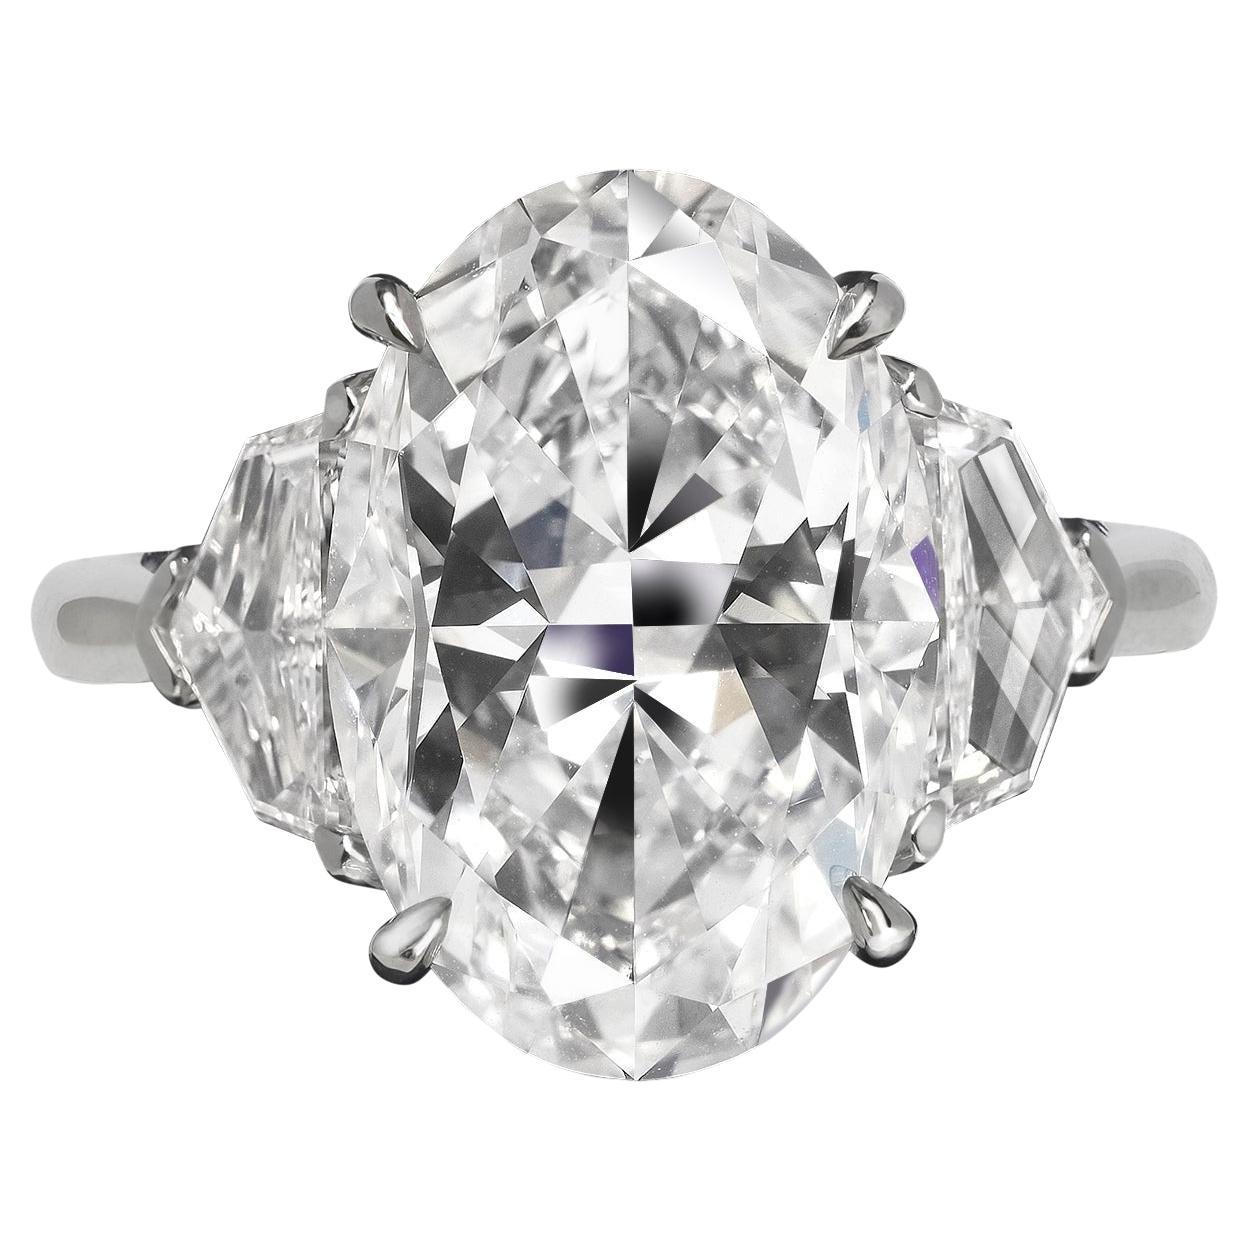 8 Carat Oval Cut Diamond Engagement Ring GIA Certified D VVS1